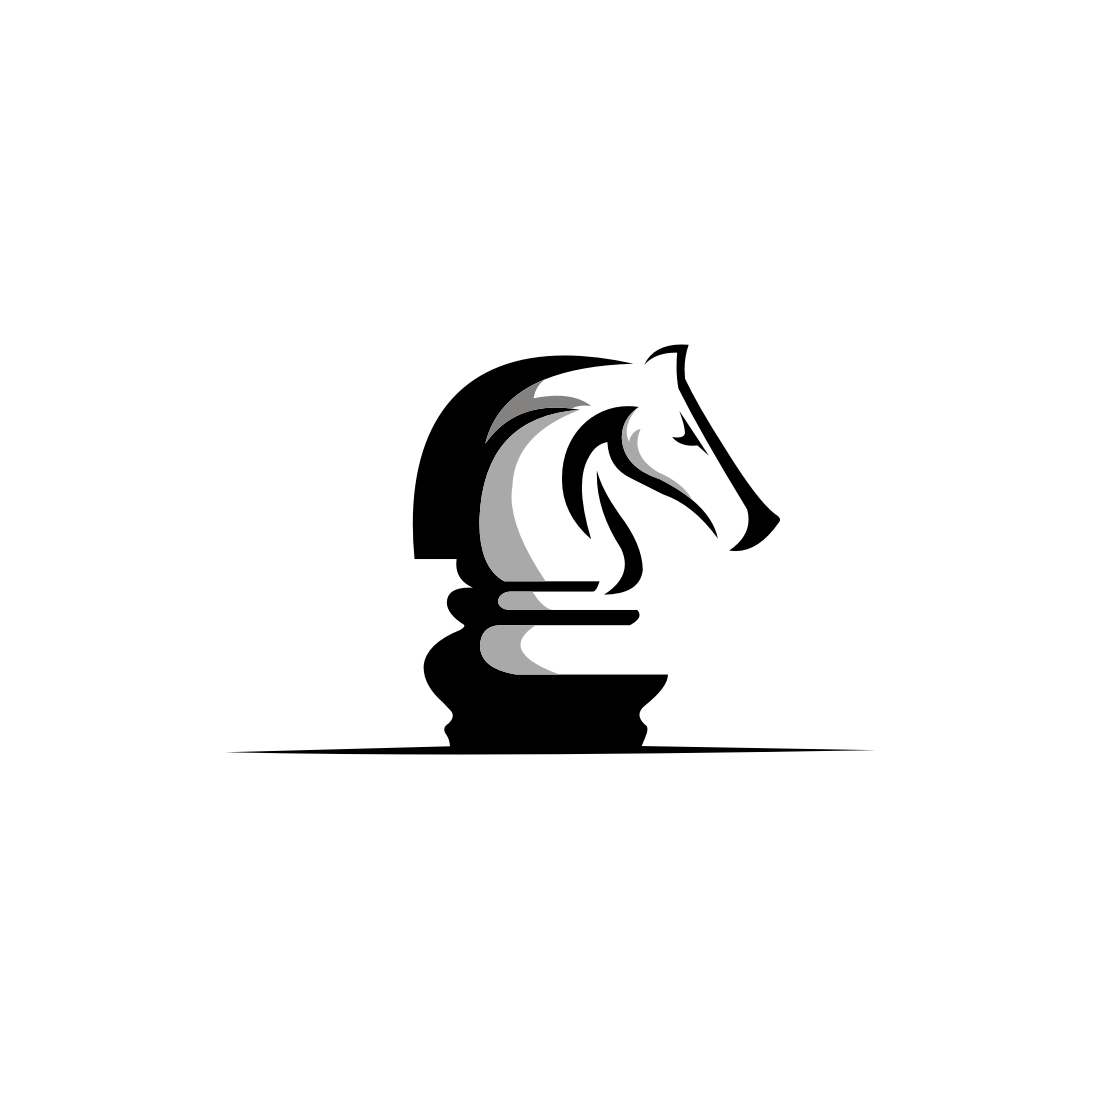 Premium Photo | Minimalist Horse Head Logo Attractive And Simple Design